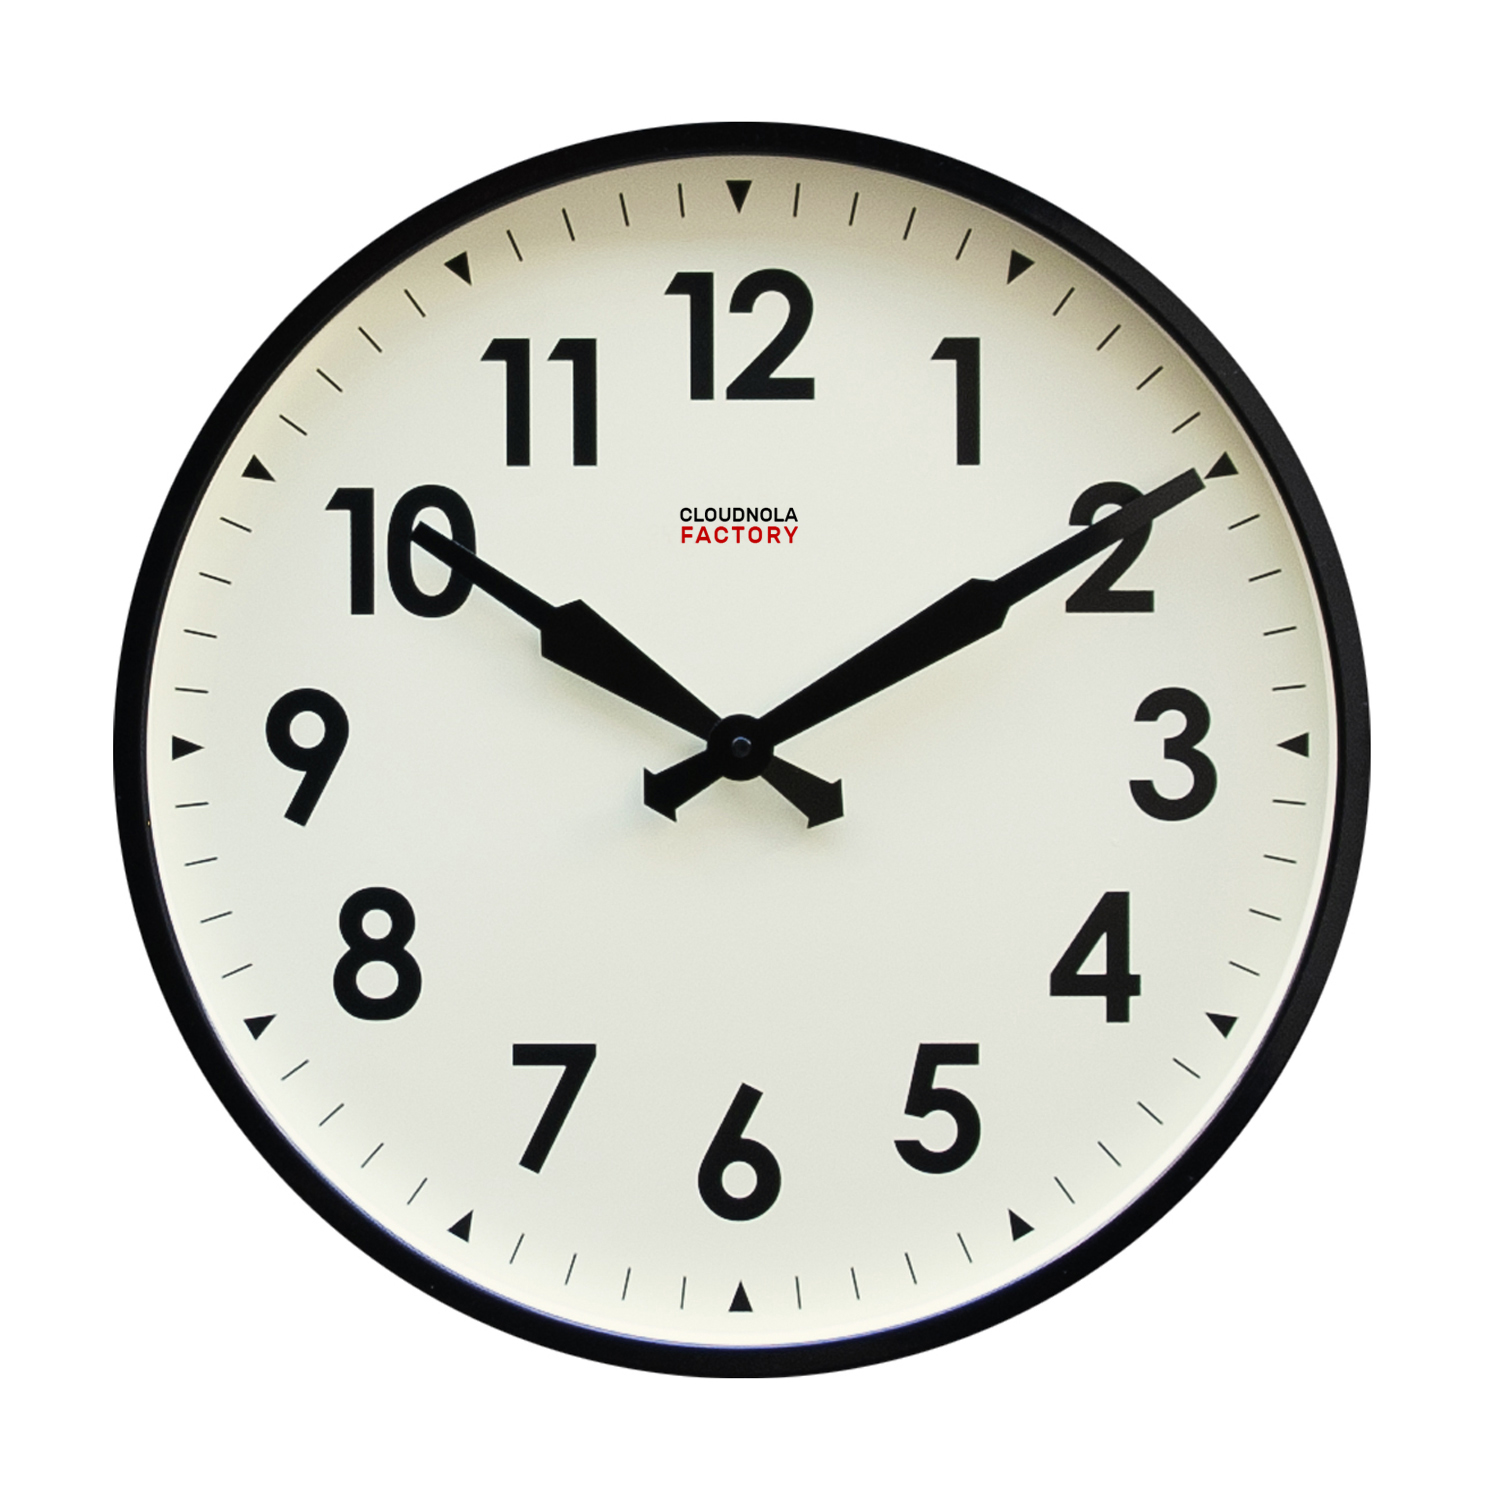 Cloudnola Factory Railway clock 45 cm Black Arabic